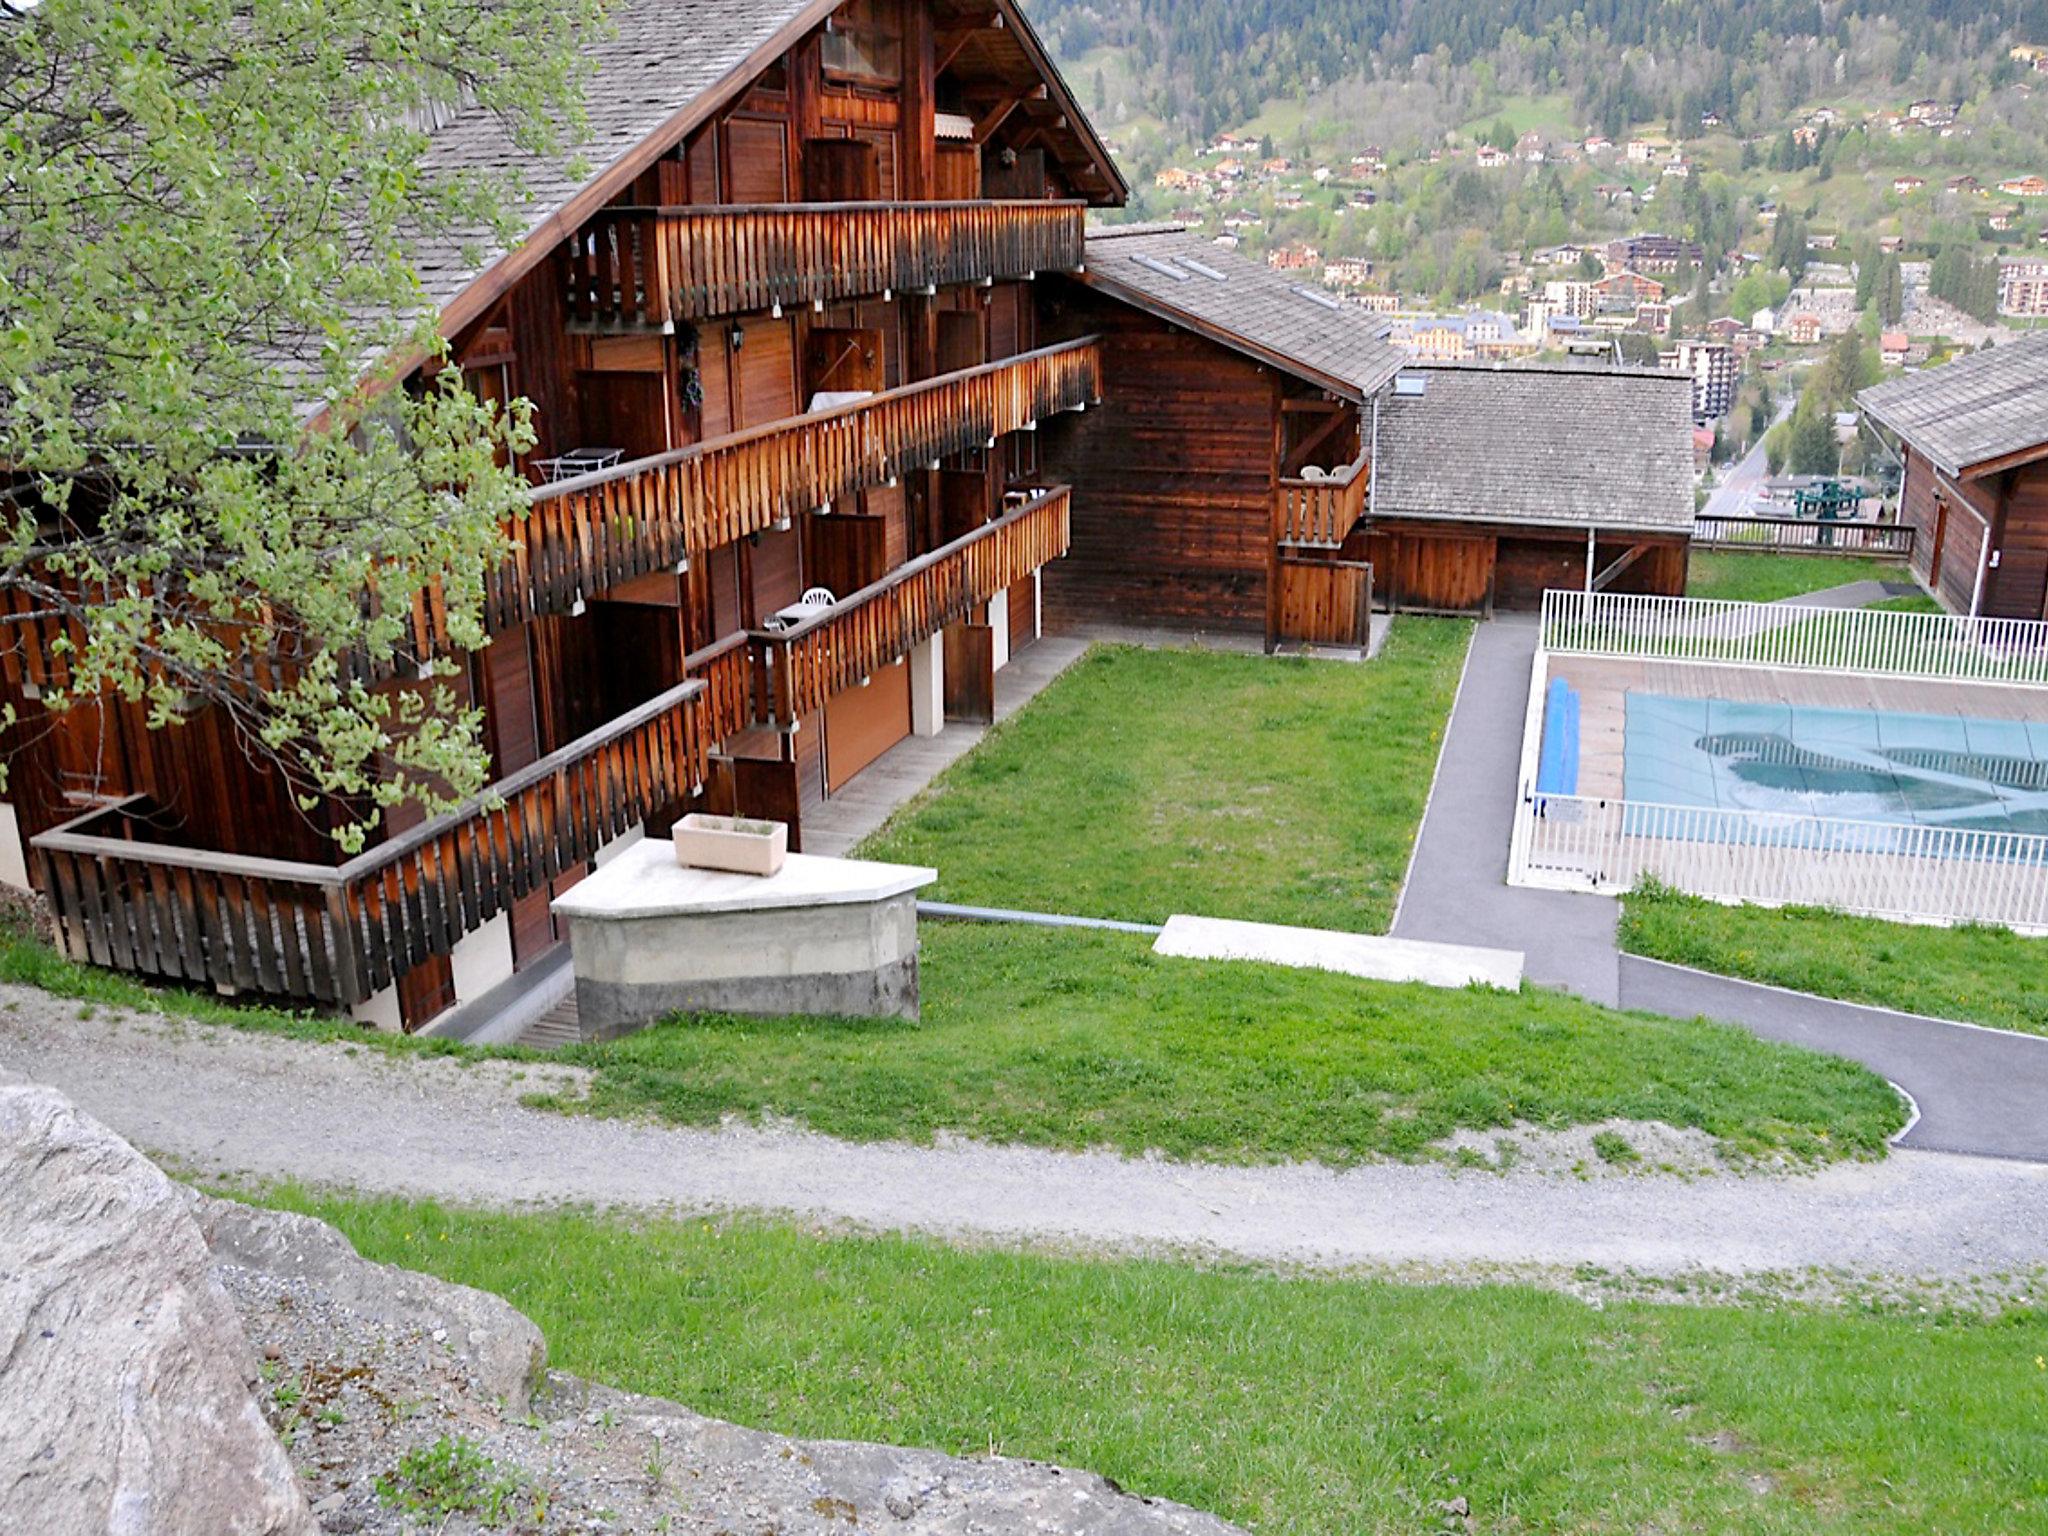 Foto 3 - Appartamento con 1 camera da letto a Saint-Gervais-les-Bains con piscina e vista sulle montagne